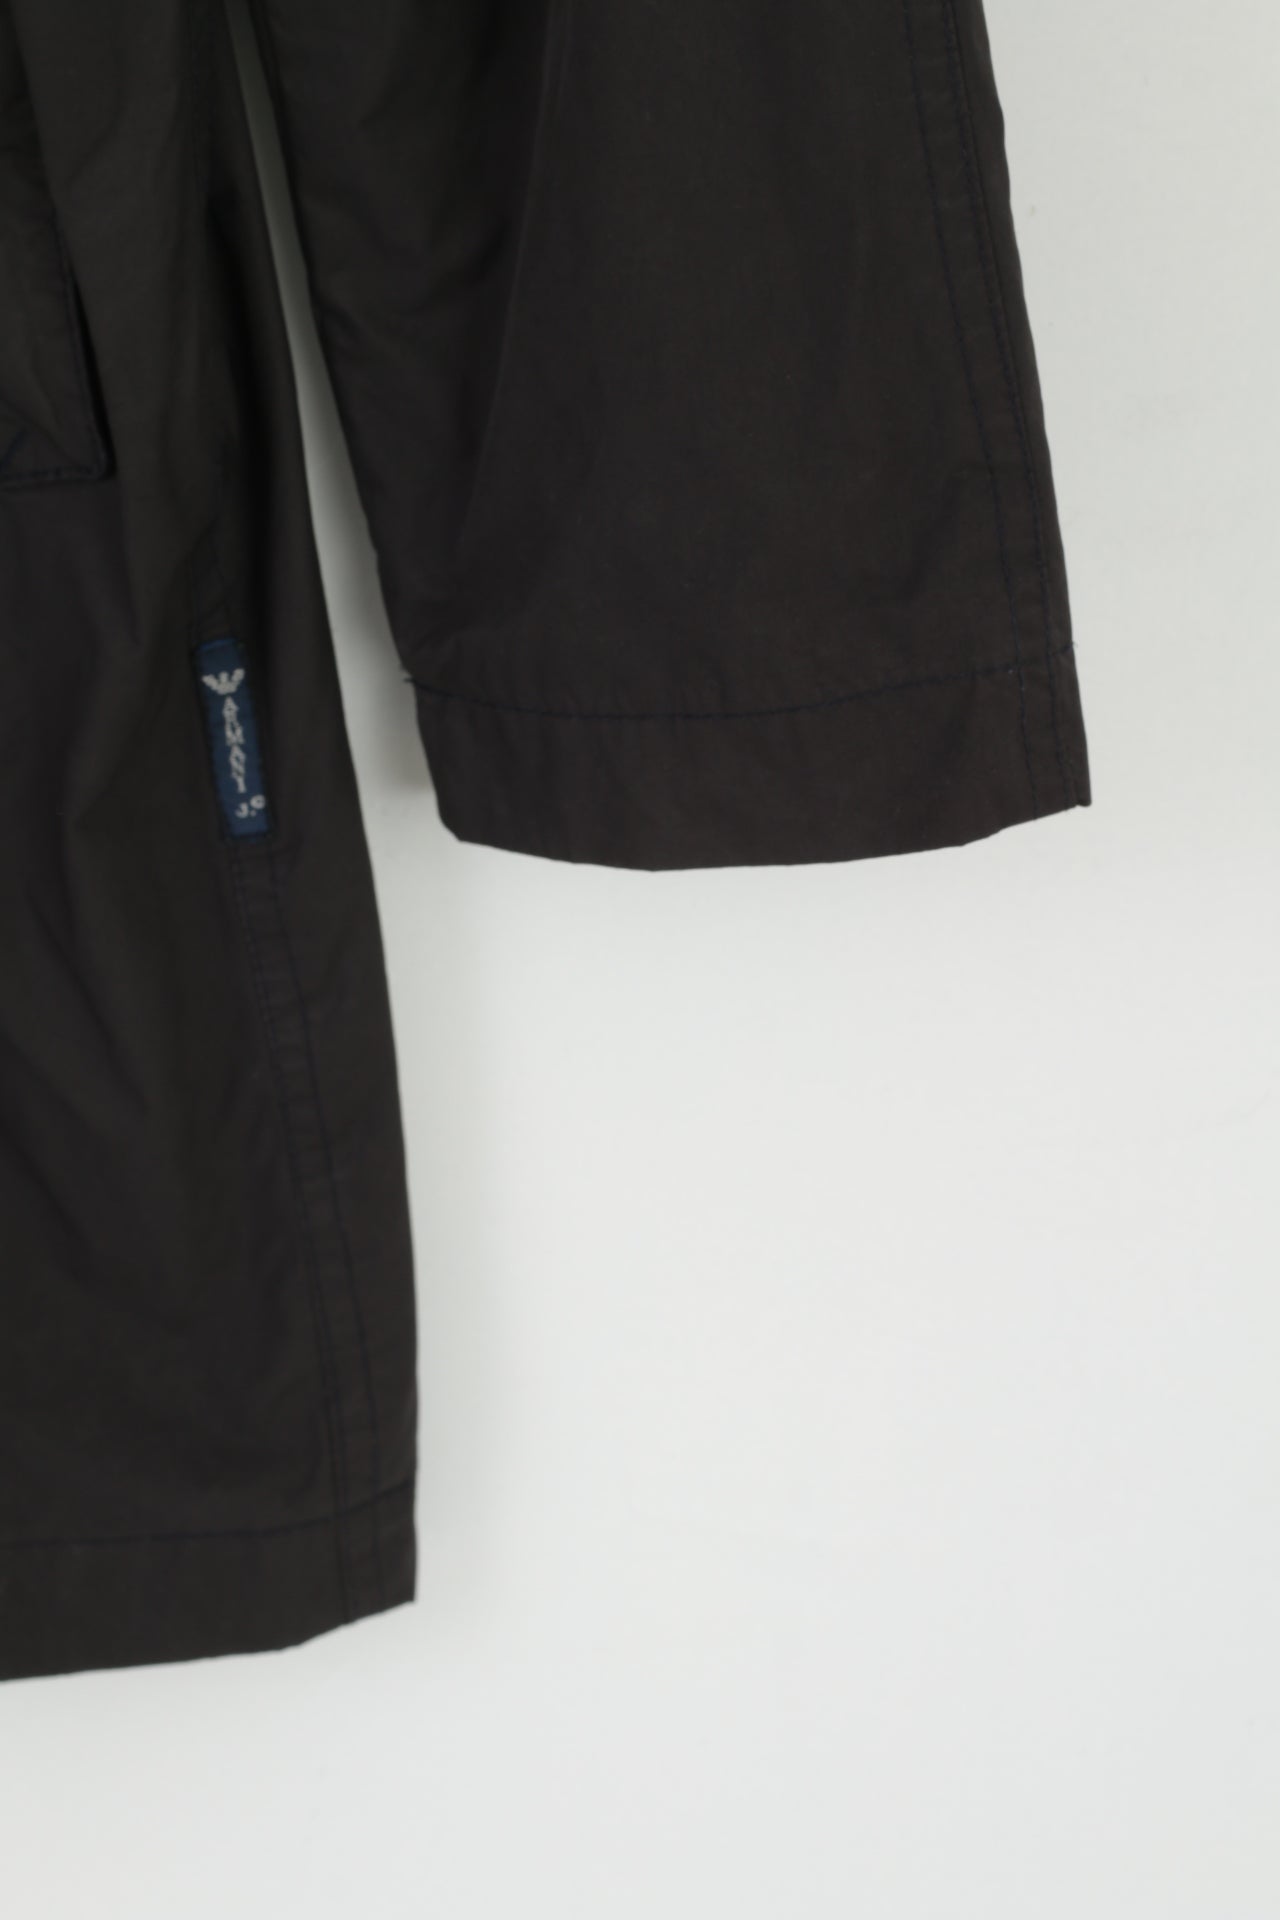 Armani Jeans Women 6 S Jacket Black Zip Up Lightweight Mac Detaciled Top